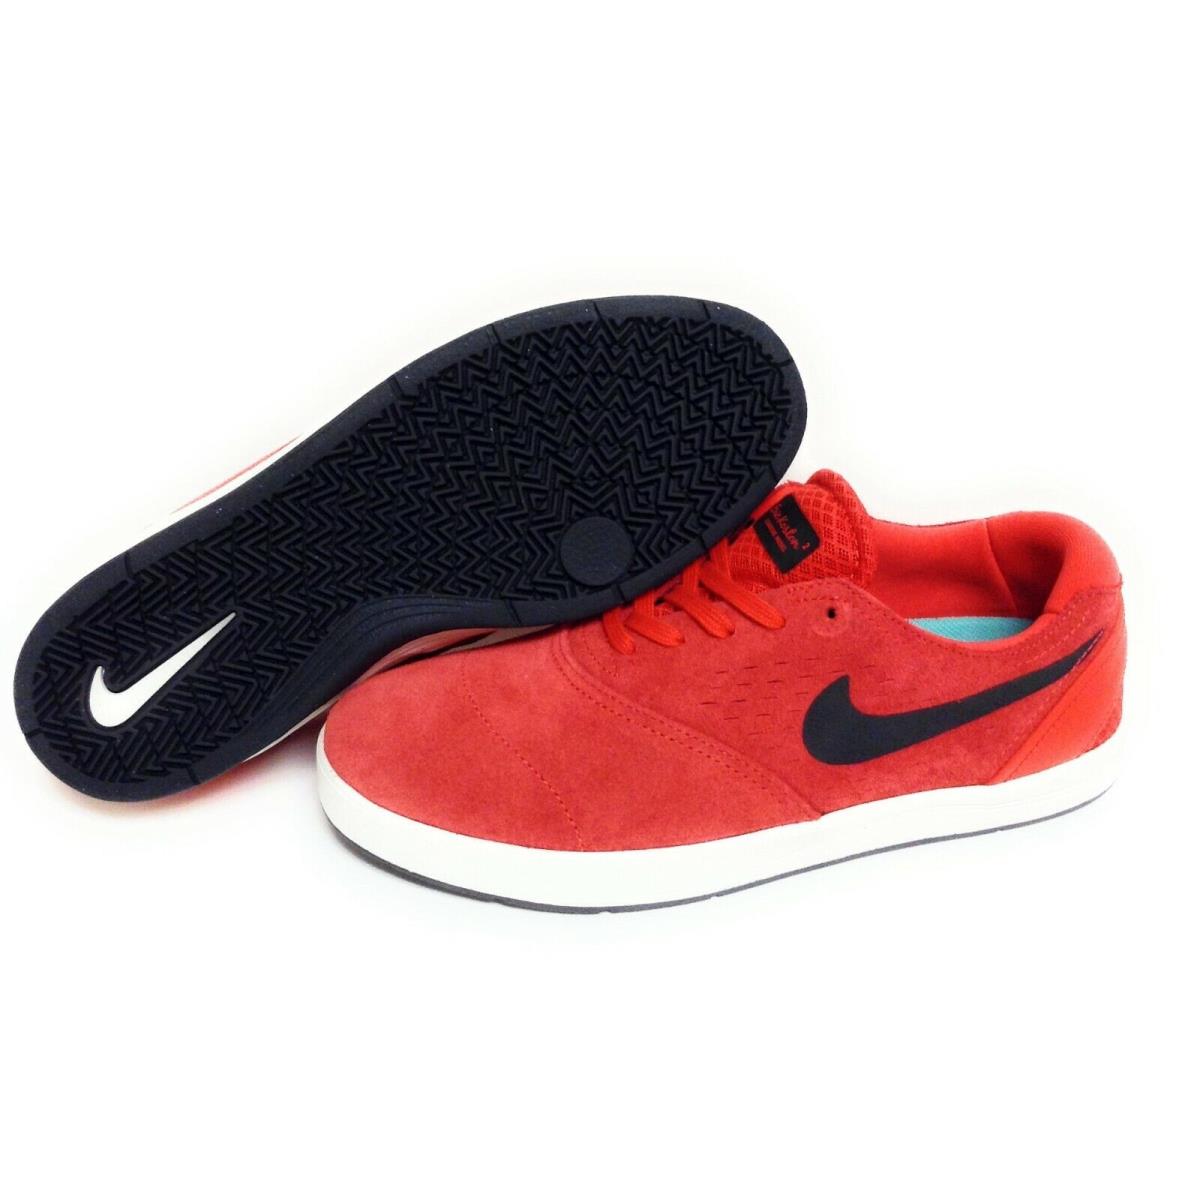 Mens Nike Eric Koston 2 580418 603 Crimson Red Black White SB Sneakers Shoes